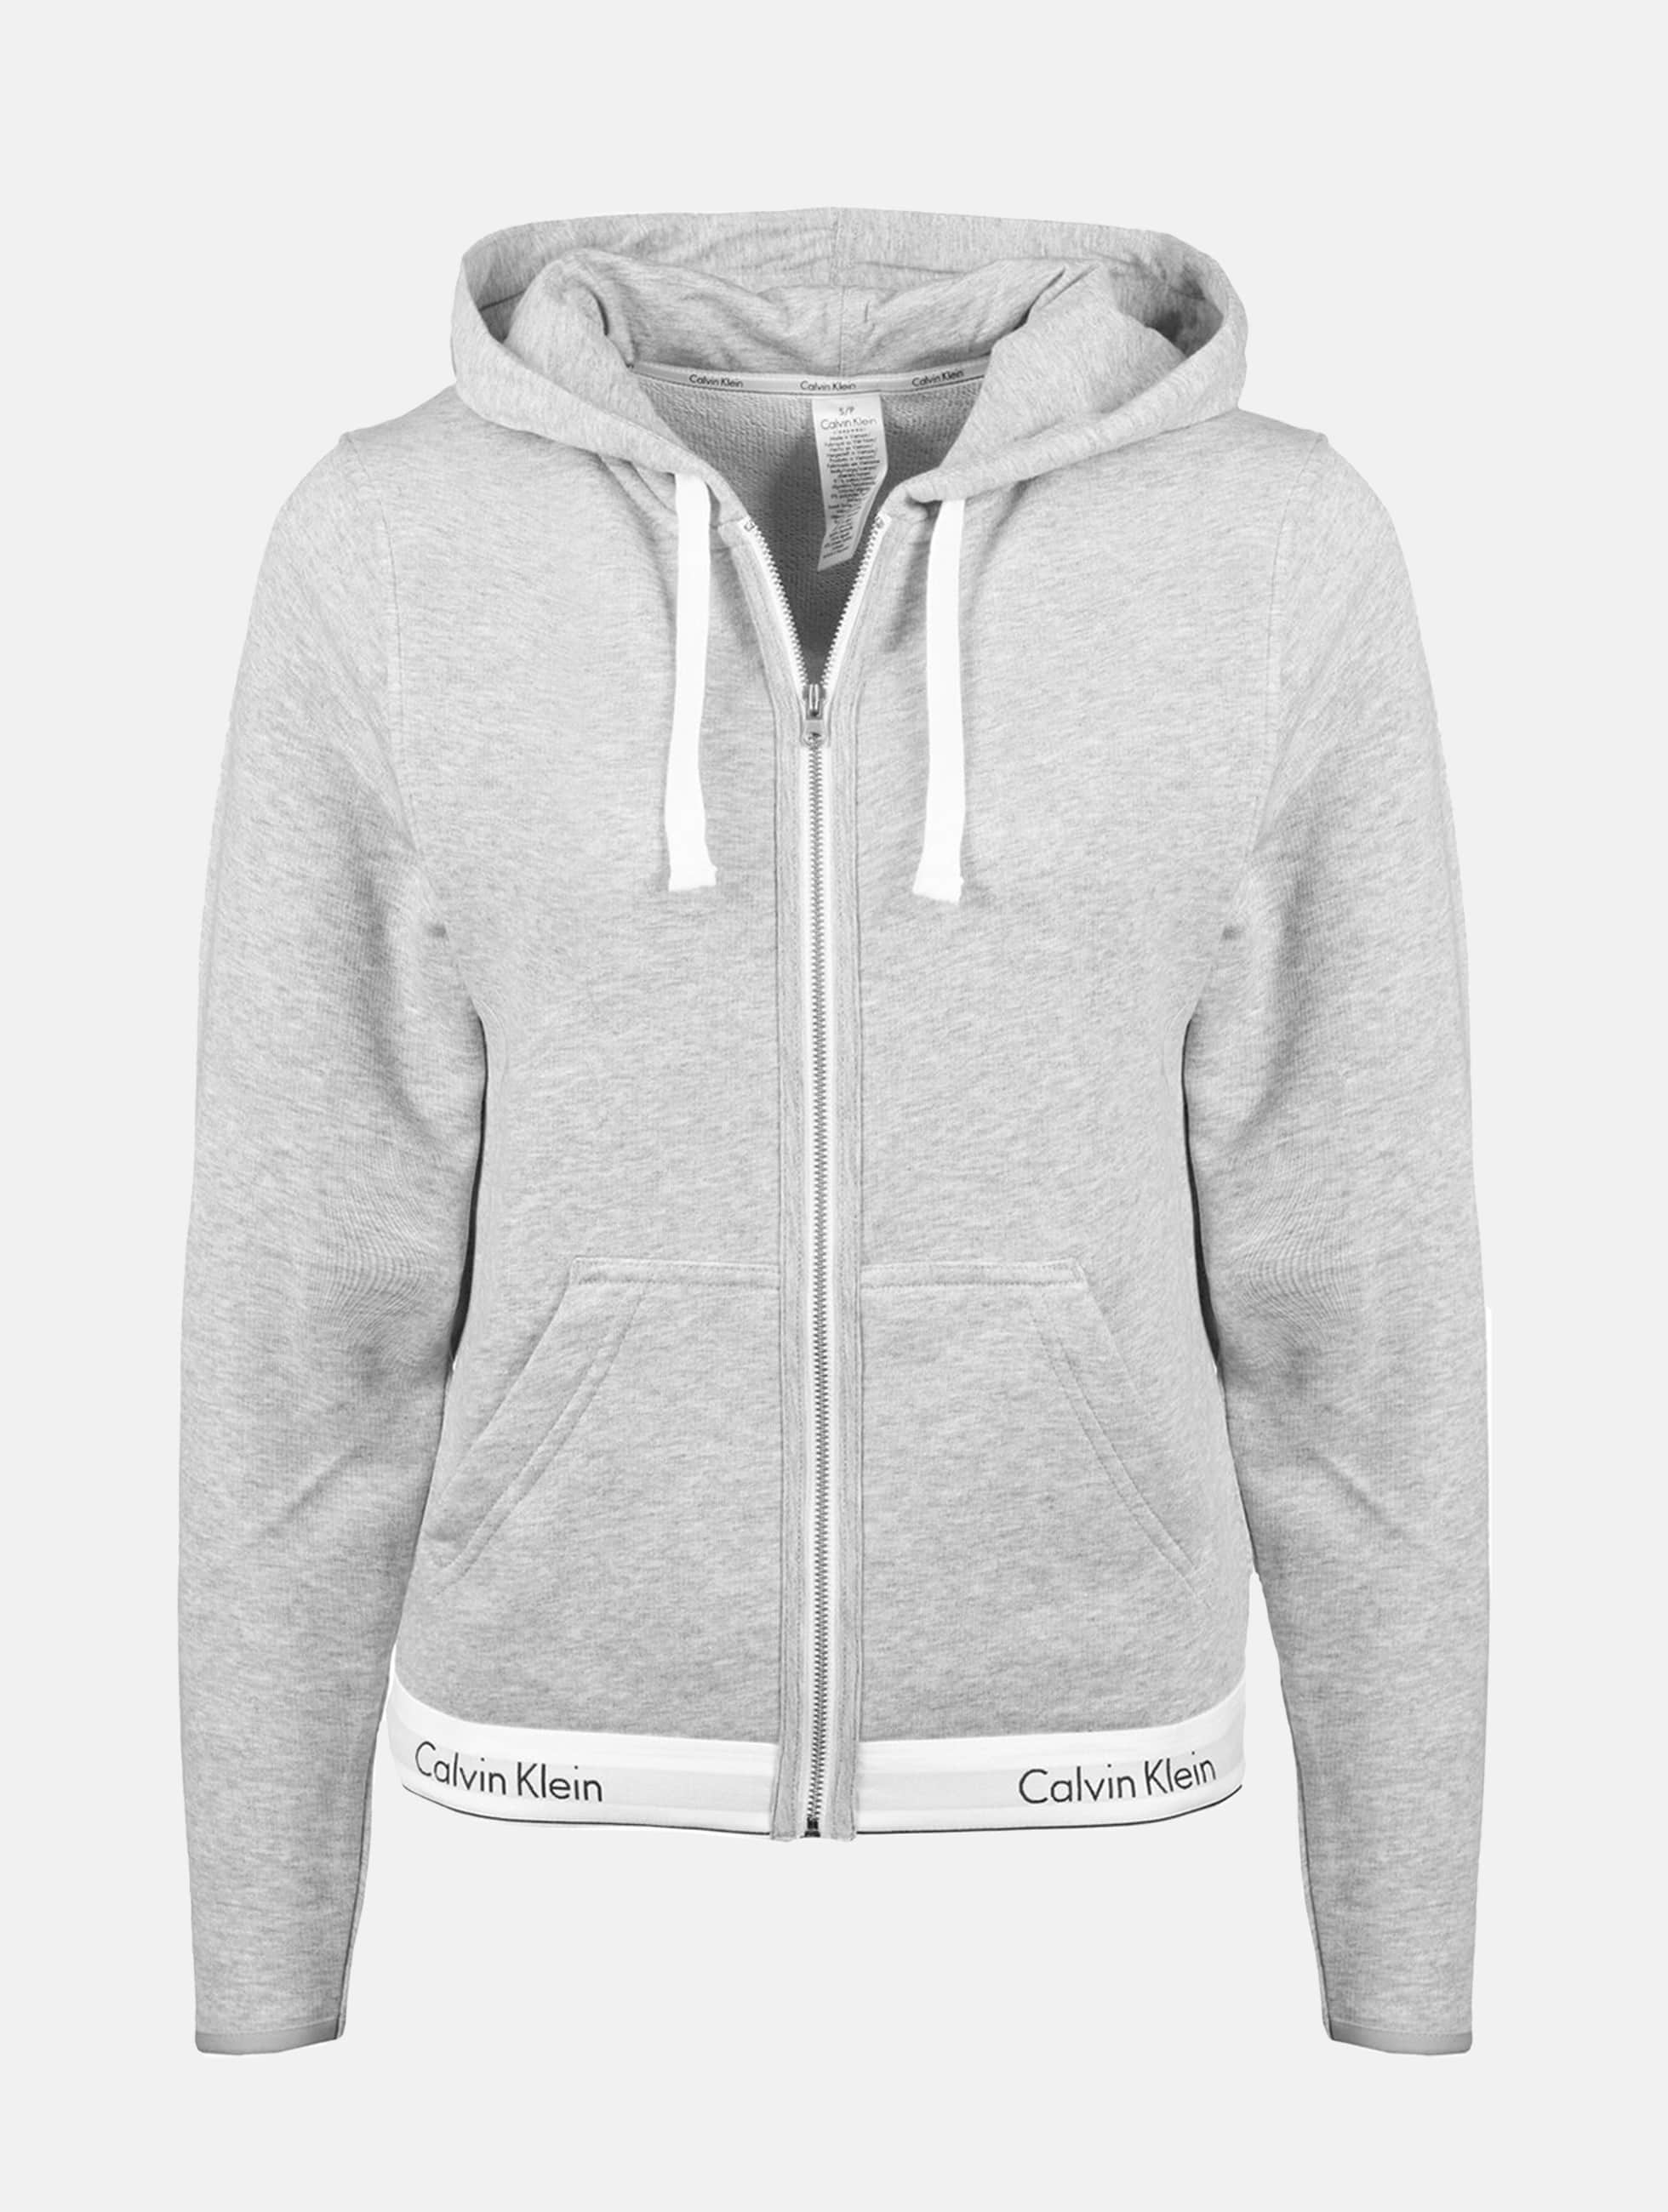 Calvin Klein / Hoodie Zip 1000337